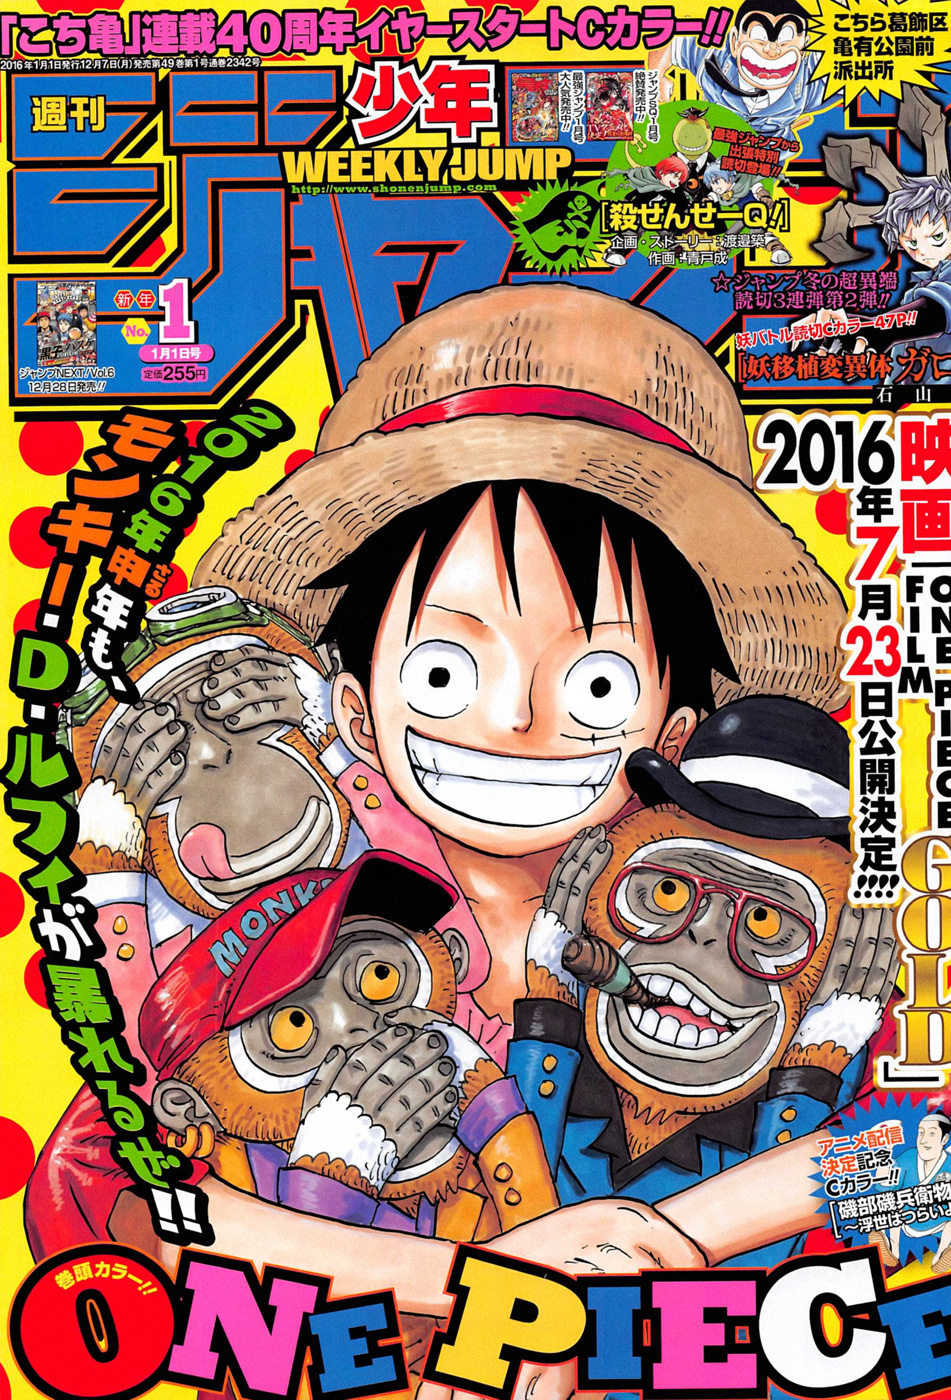 Weekly-Shonen-Jump-Magazine-December-7-Cover